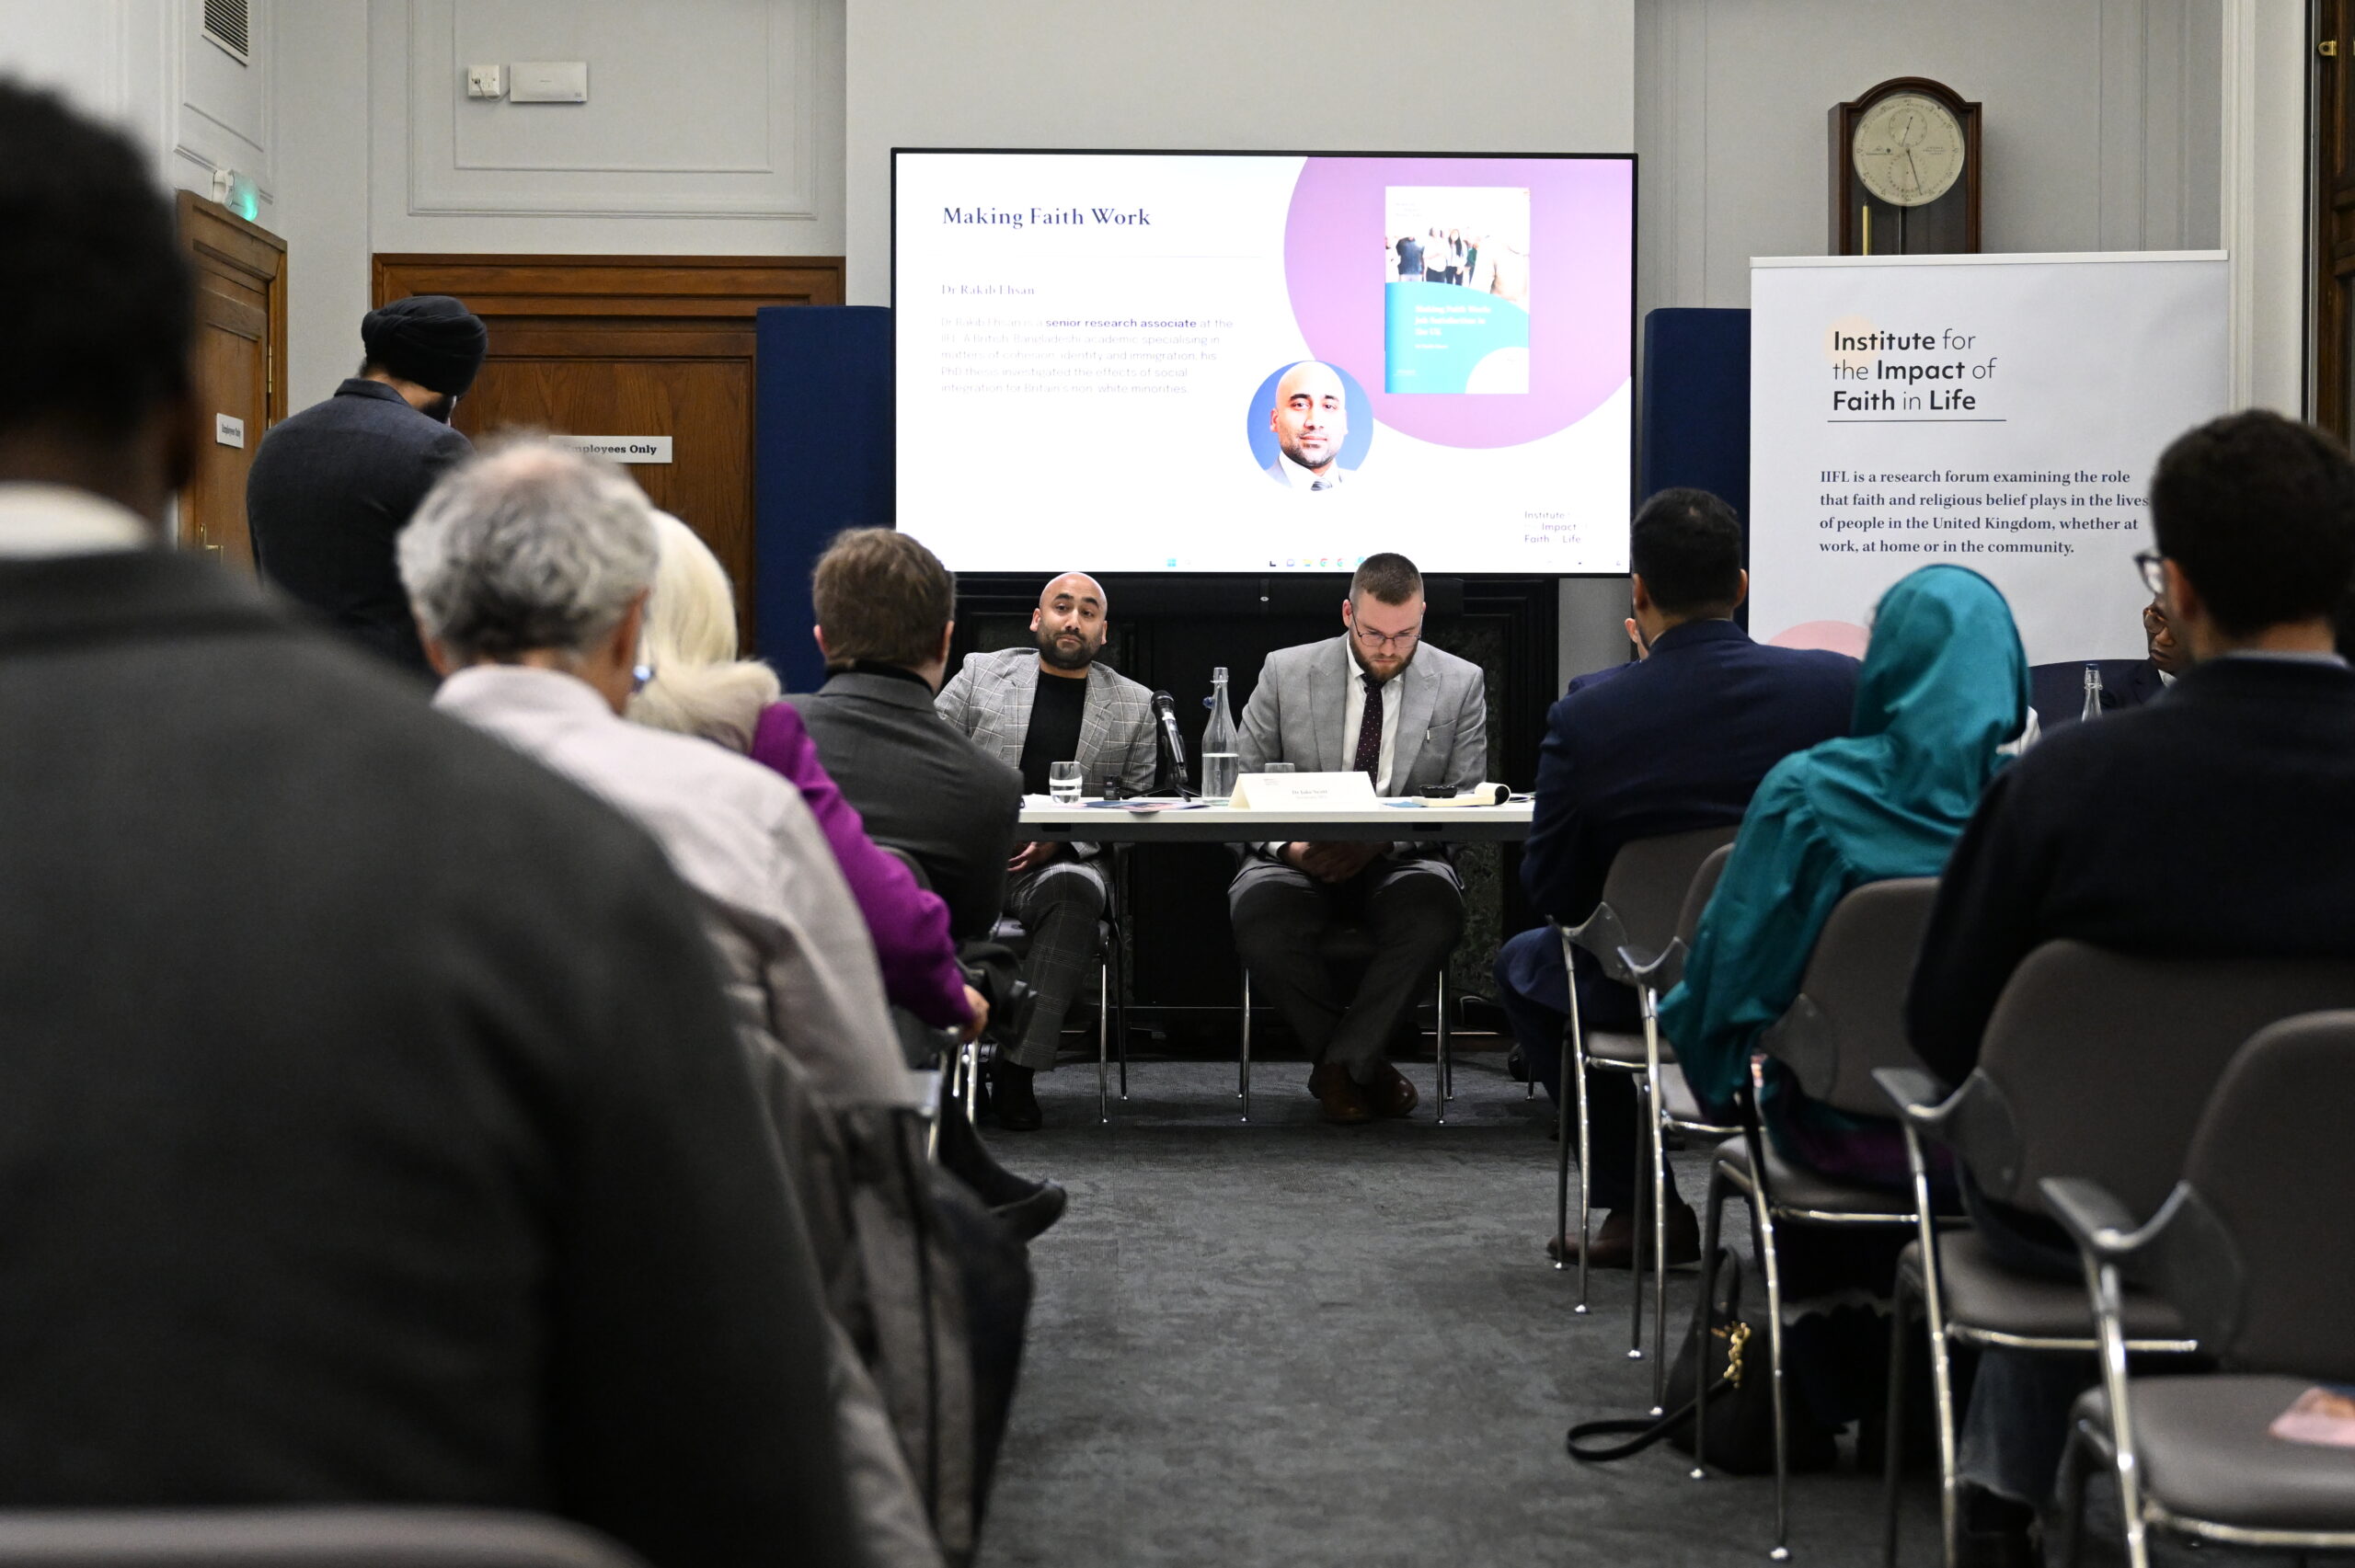 IIFL launch event - Dr. Rakib Ehsan discusses the report's findings.